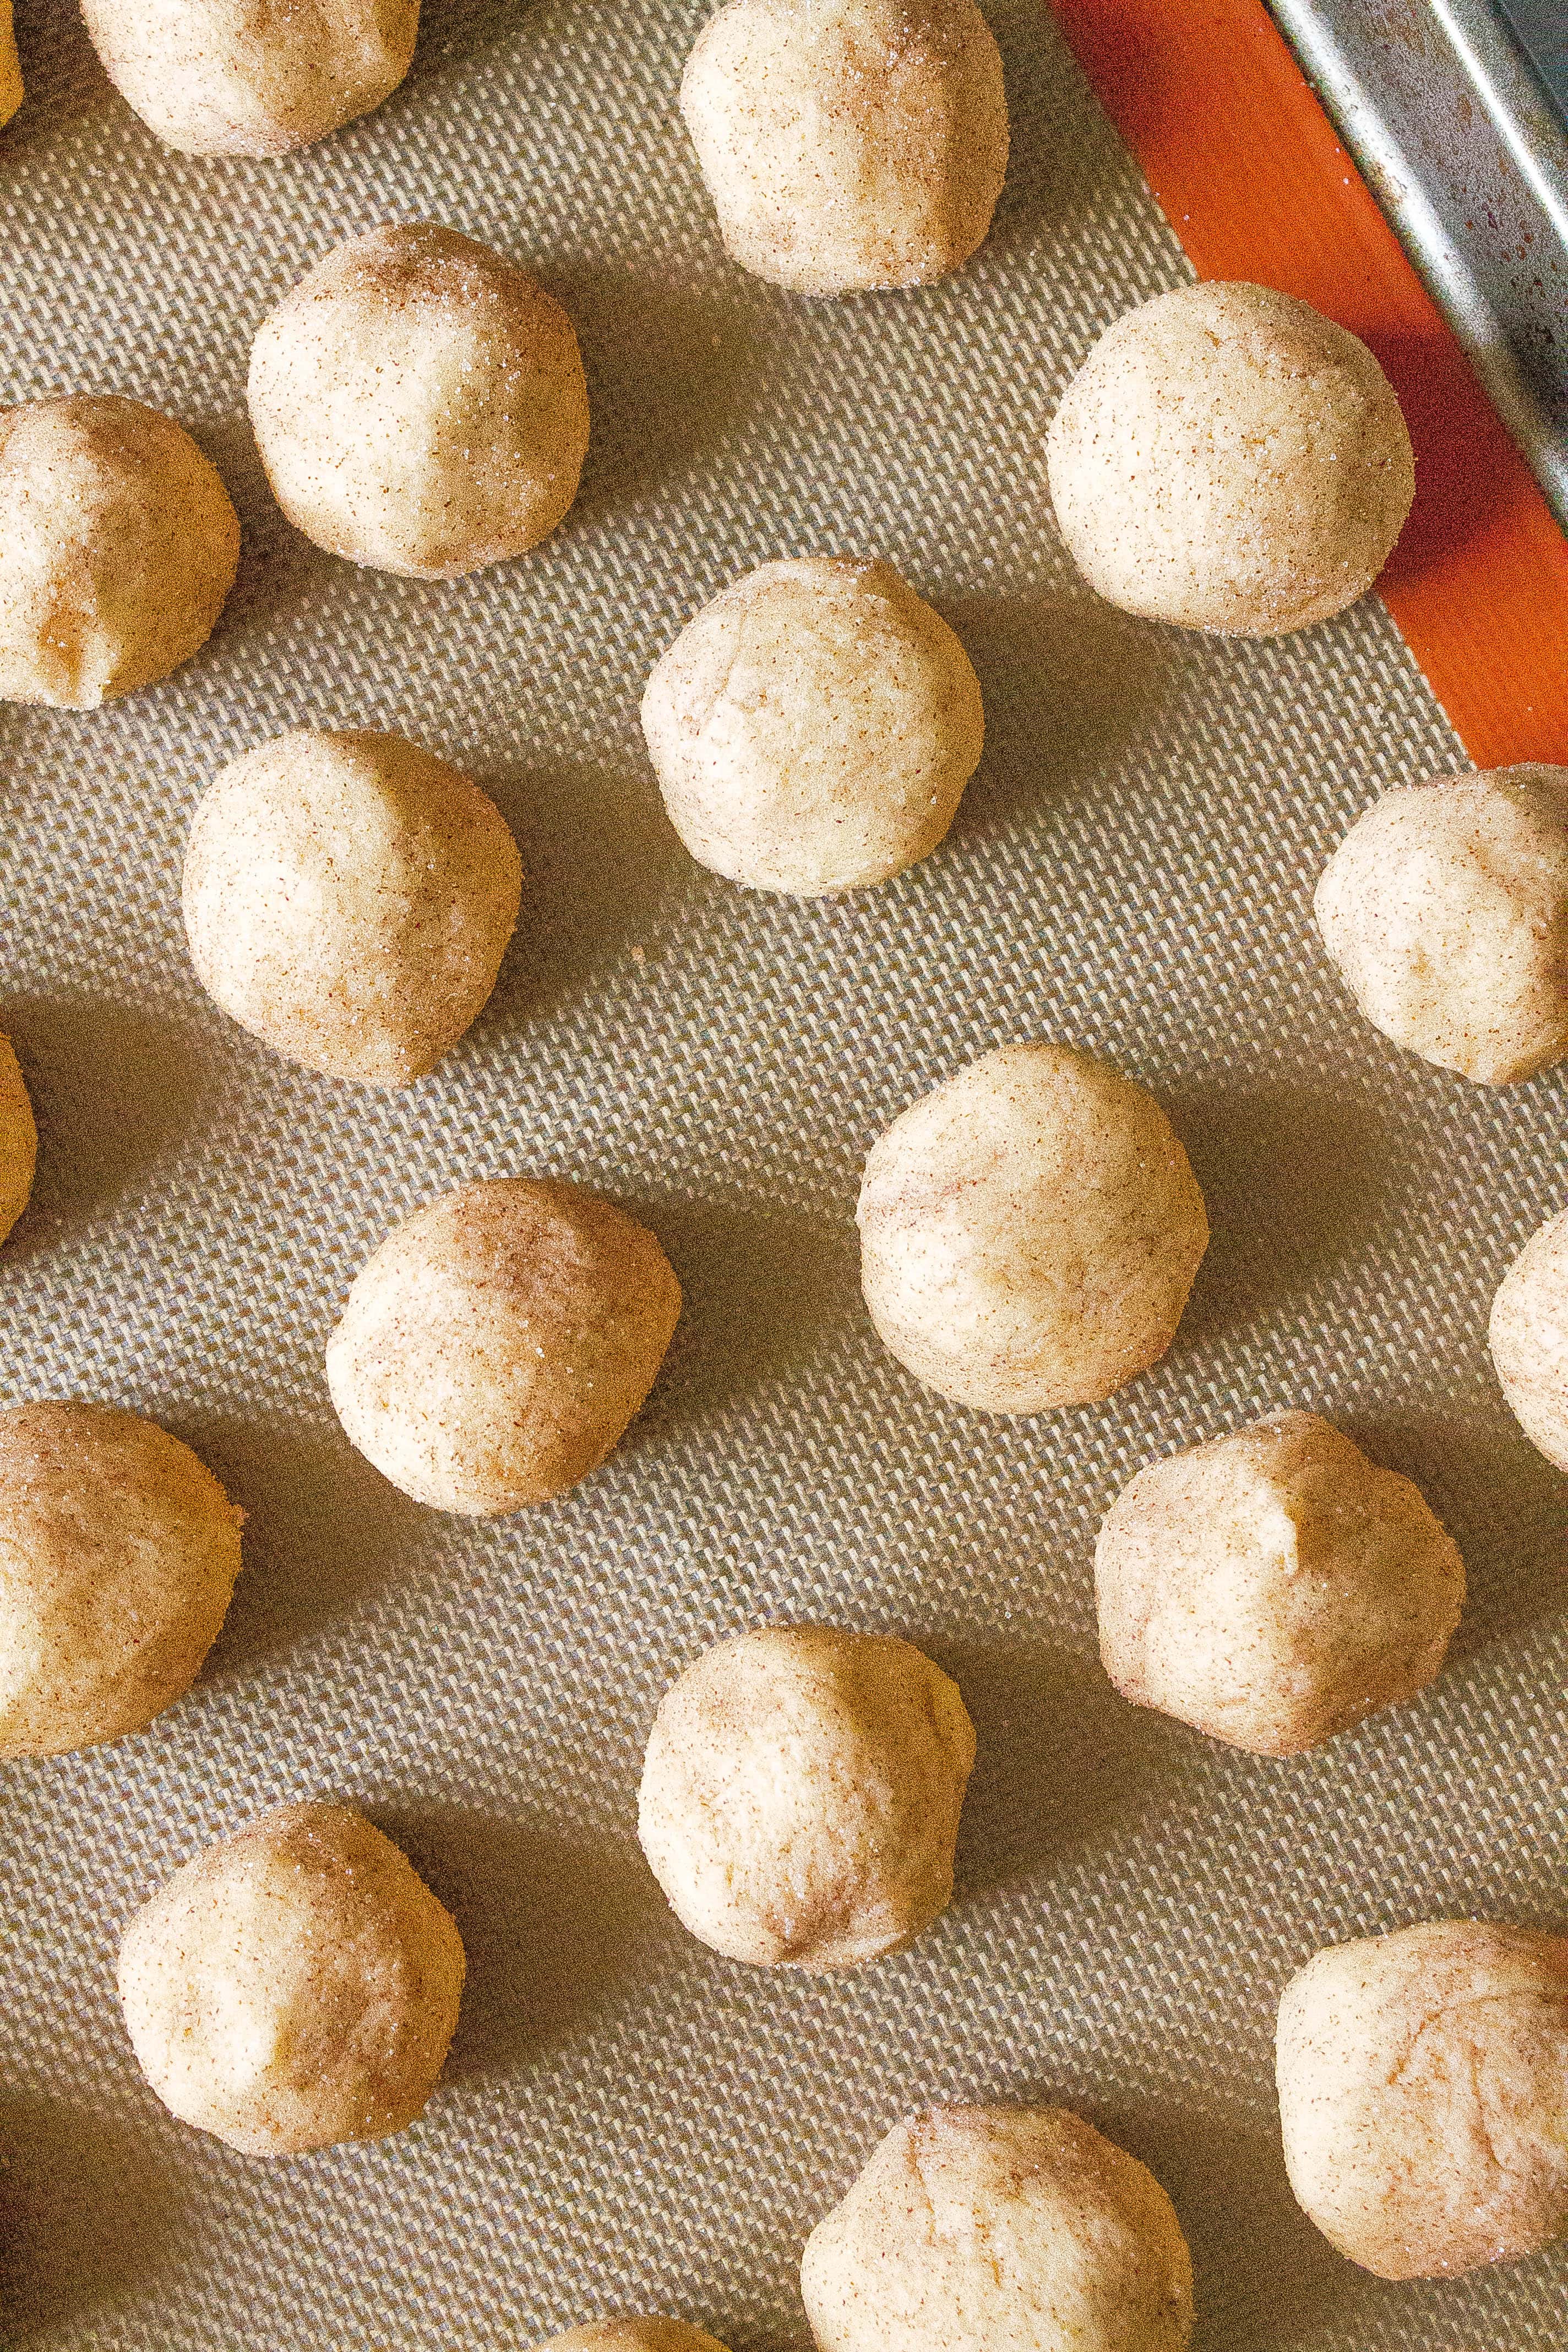 Snickerdoodle Cookie dough balls